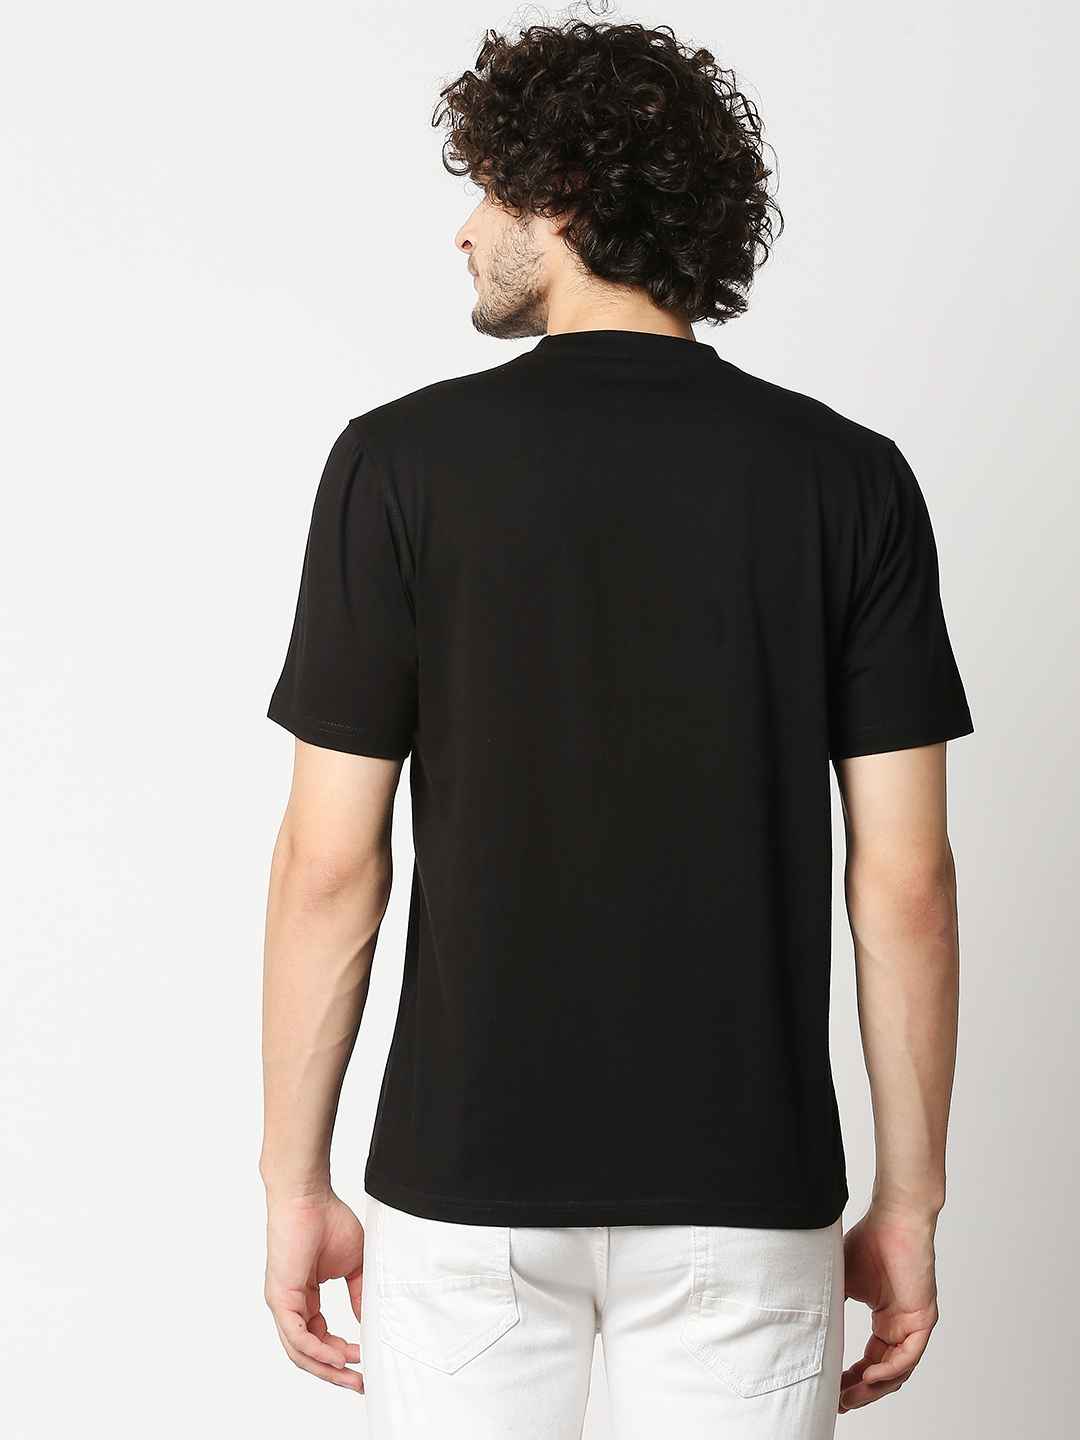 Buy Men's Comfort fit Black chest print T-shirt